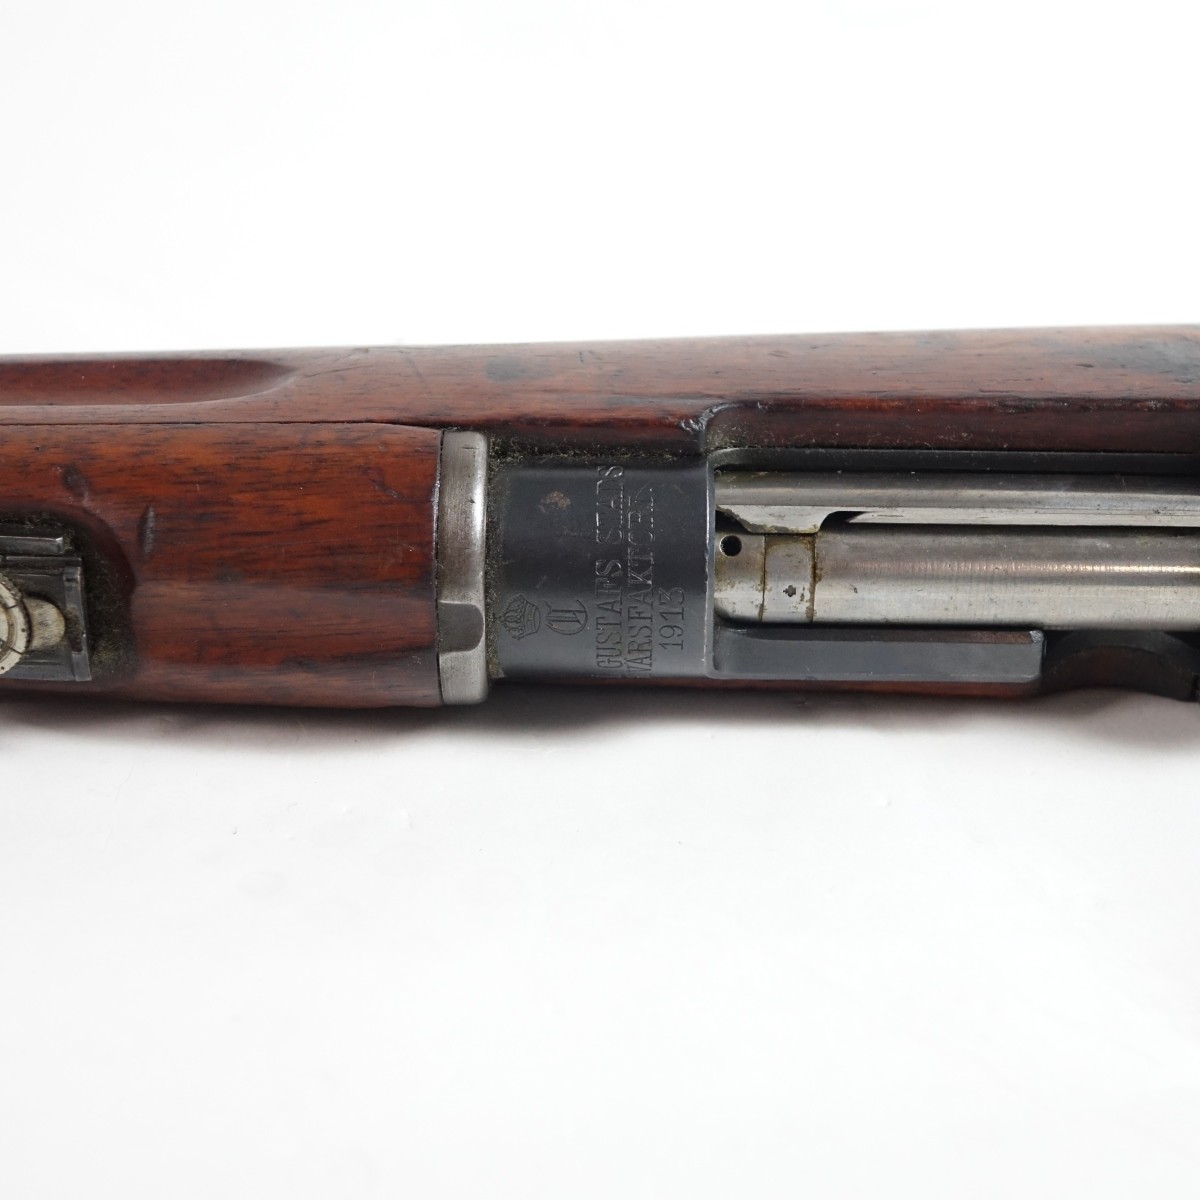 Carl Gustafs Stads Gevarsfaktori 1913 Mauser